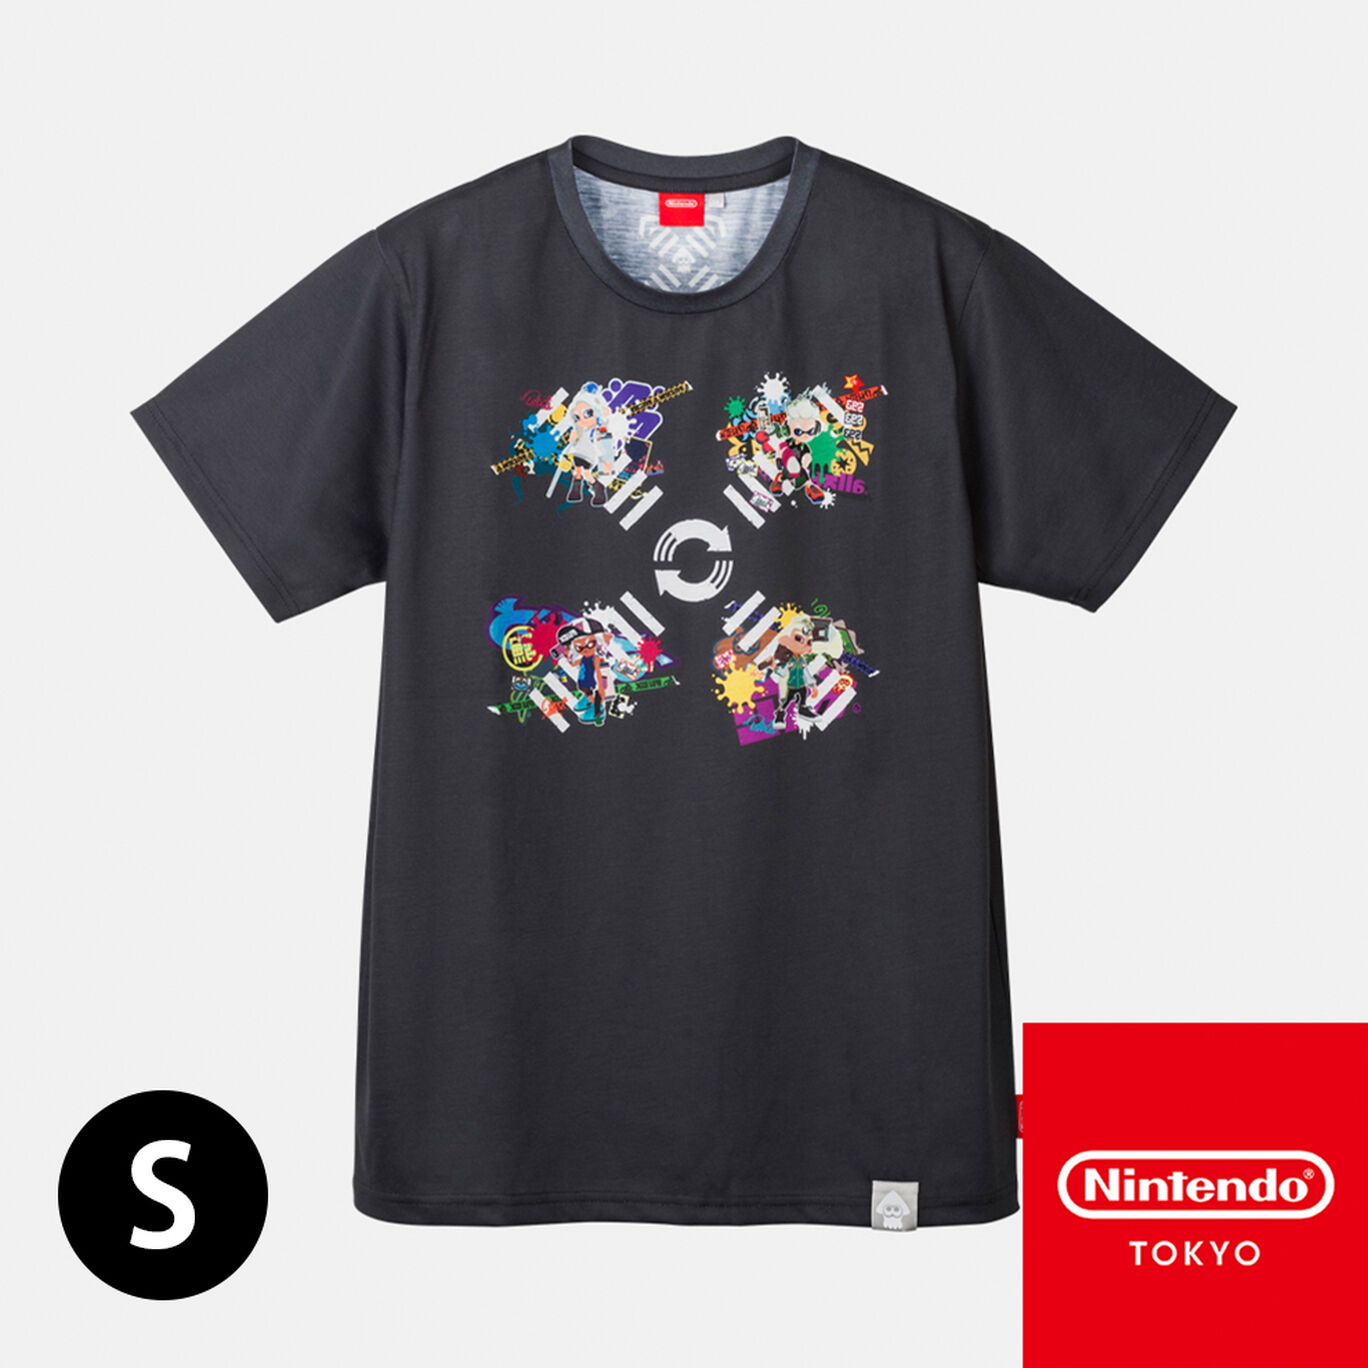 Tシャツ Crossing Splatoon A Nintendo Tokyo取り扱い商品 My Nintendo Store マイニンテンドーストア